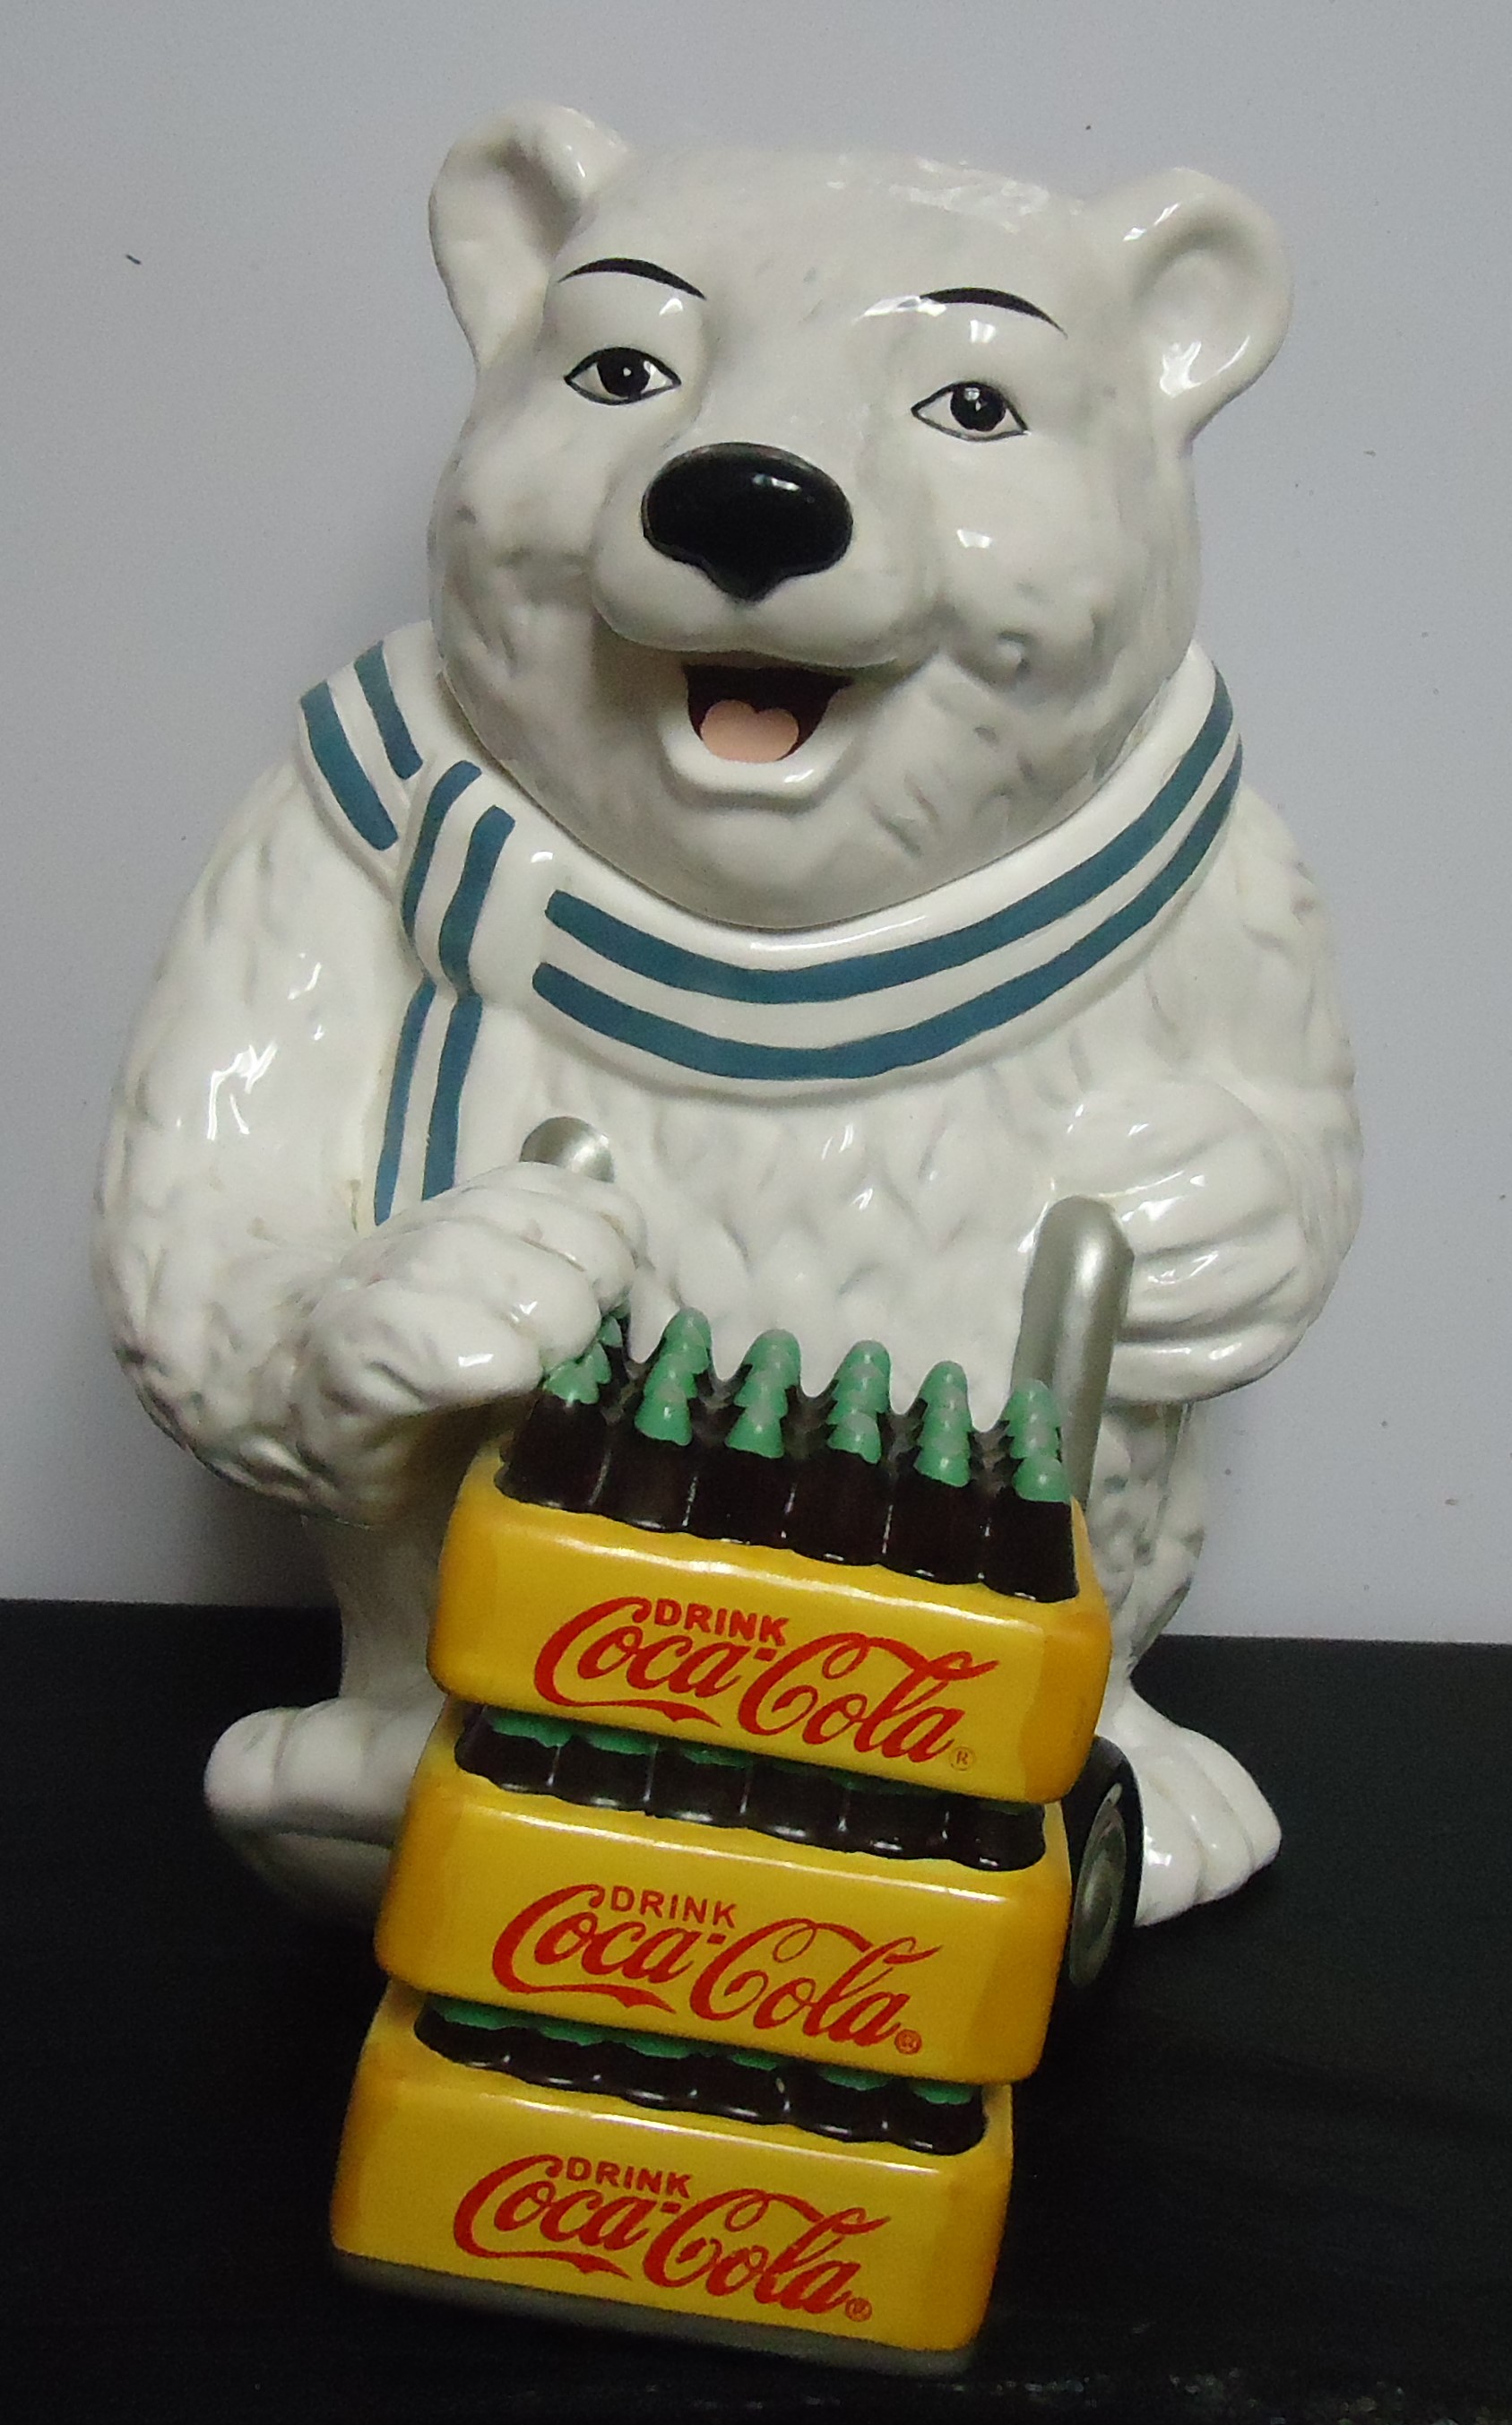 (3) Coca- Cola Polar Bear
Cookie Jar W/ Coke Crates
$60.00